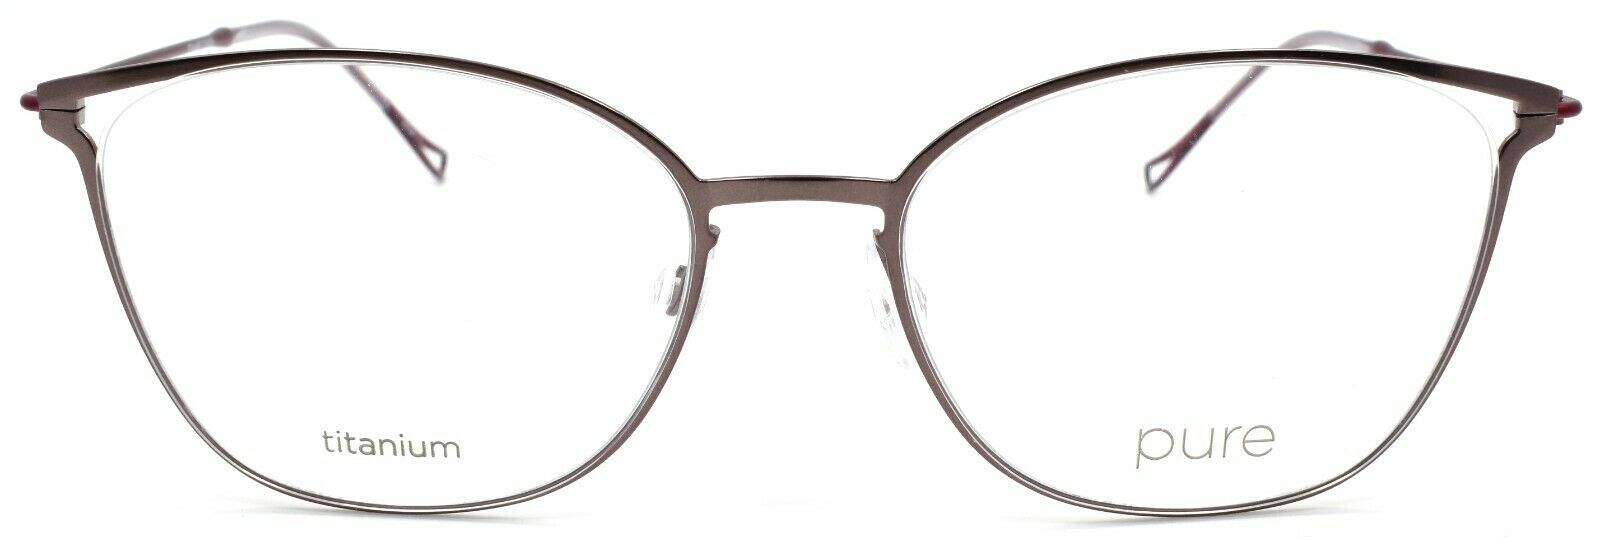 2-Marchon Airlock Pure P-5004 601 Women's Eyeglasses Frame Titanium 51-17-140 Rose-886895473057-IKSpecs